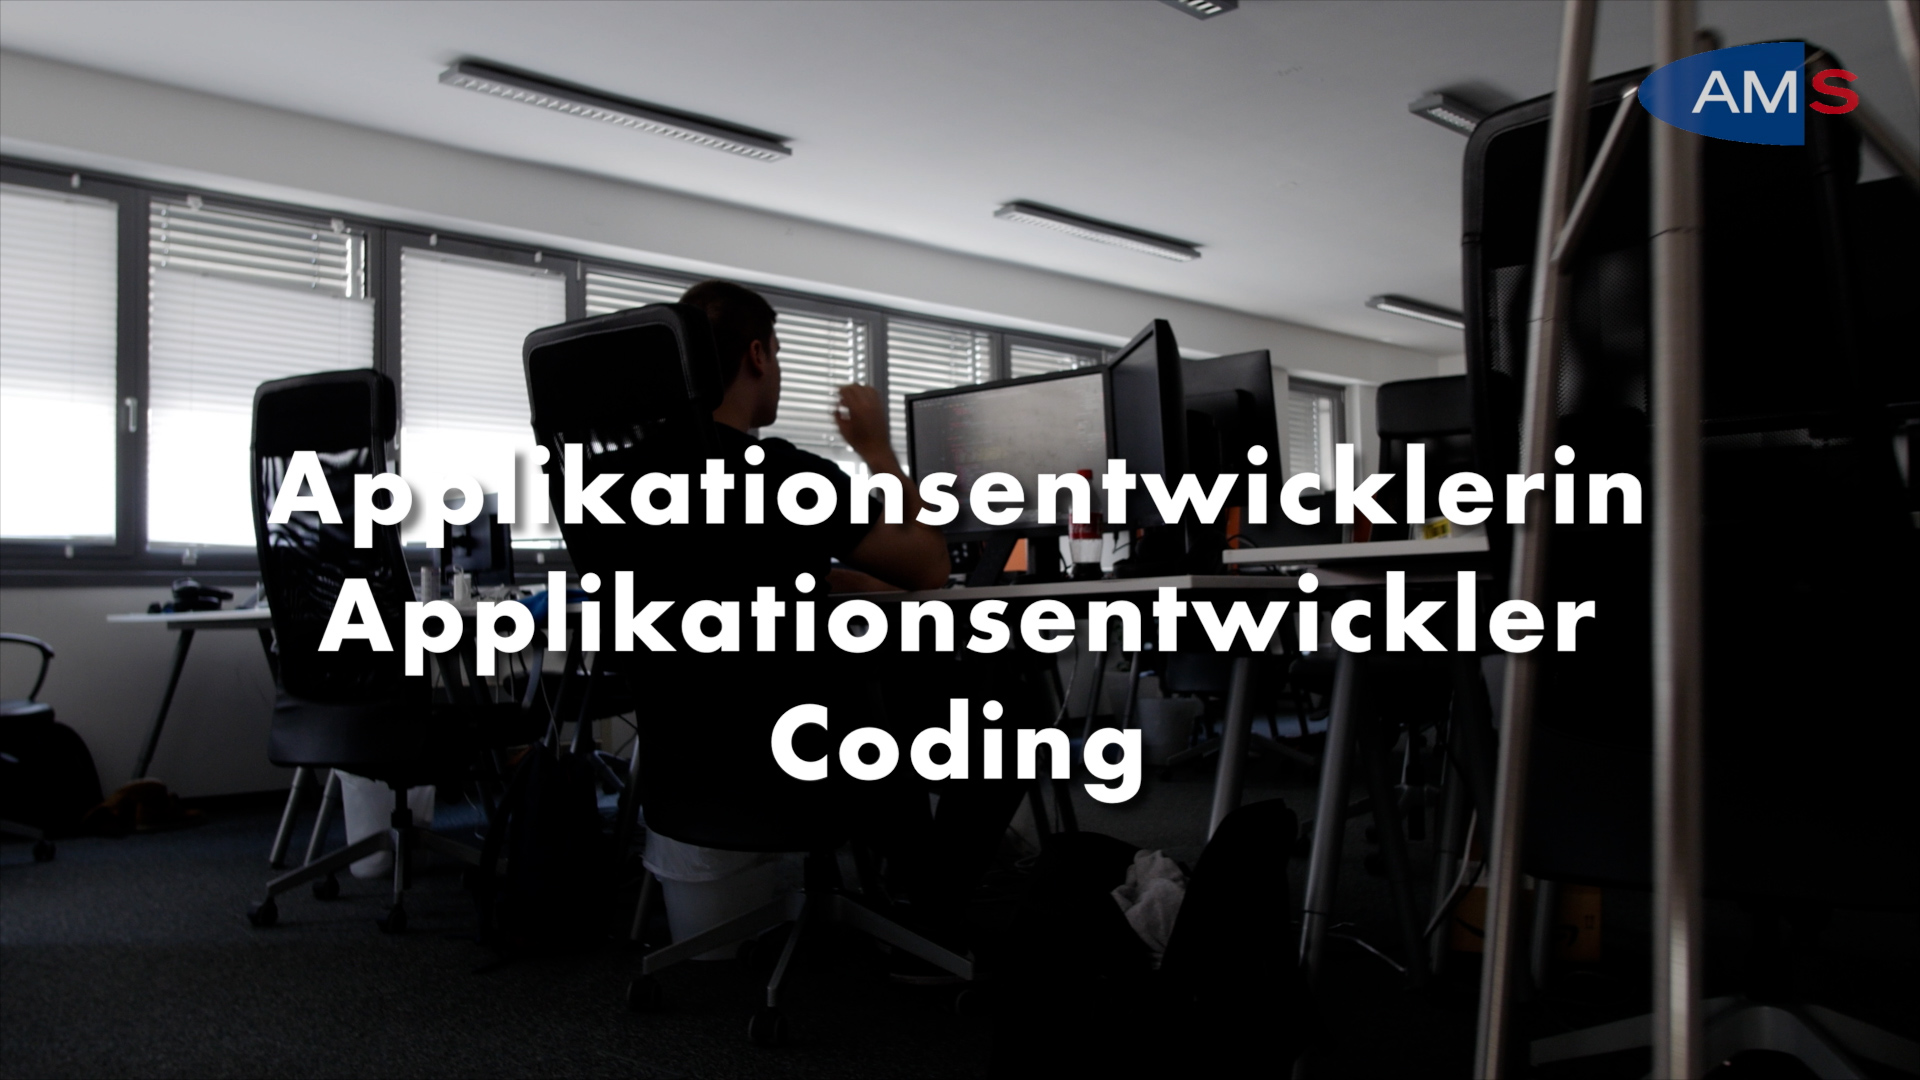 ApplikationsentwicklerIn - Coding